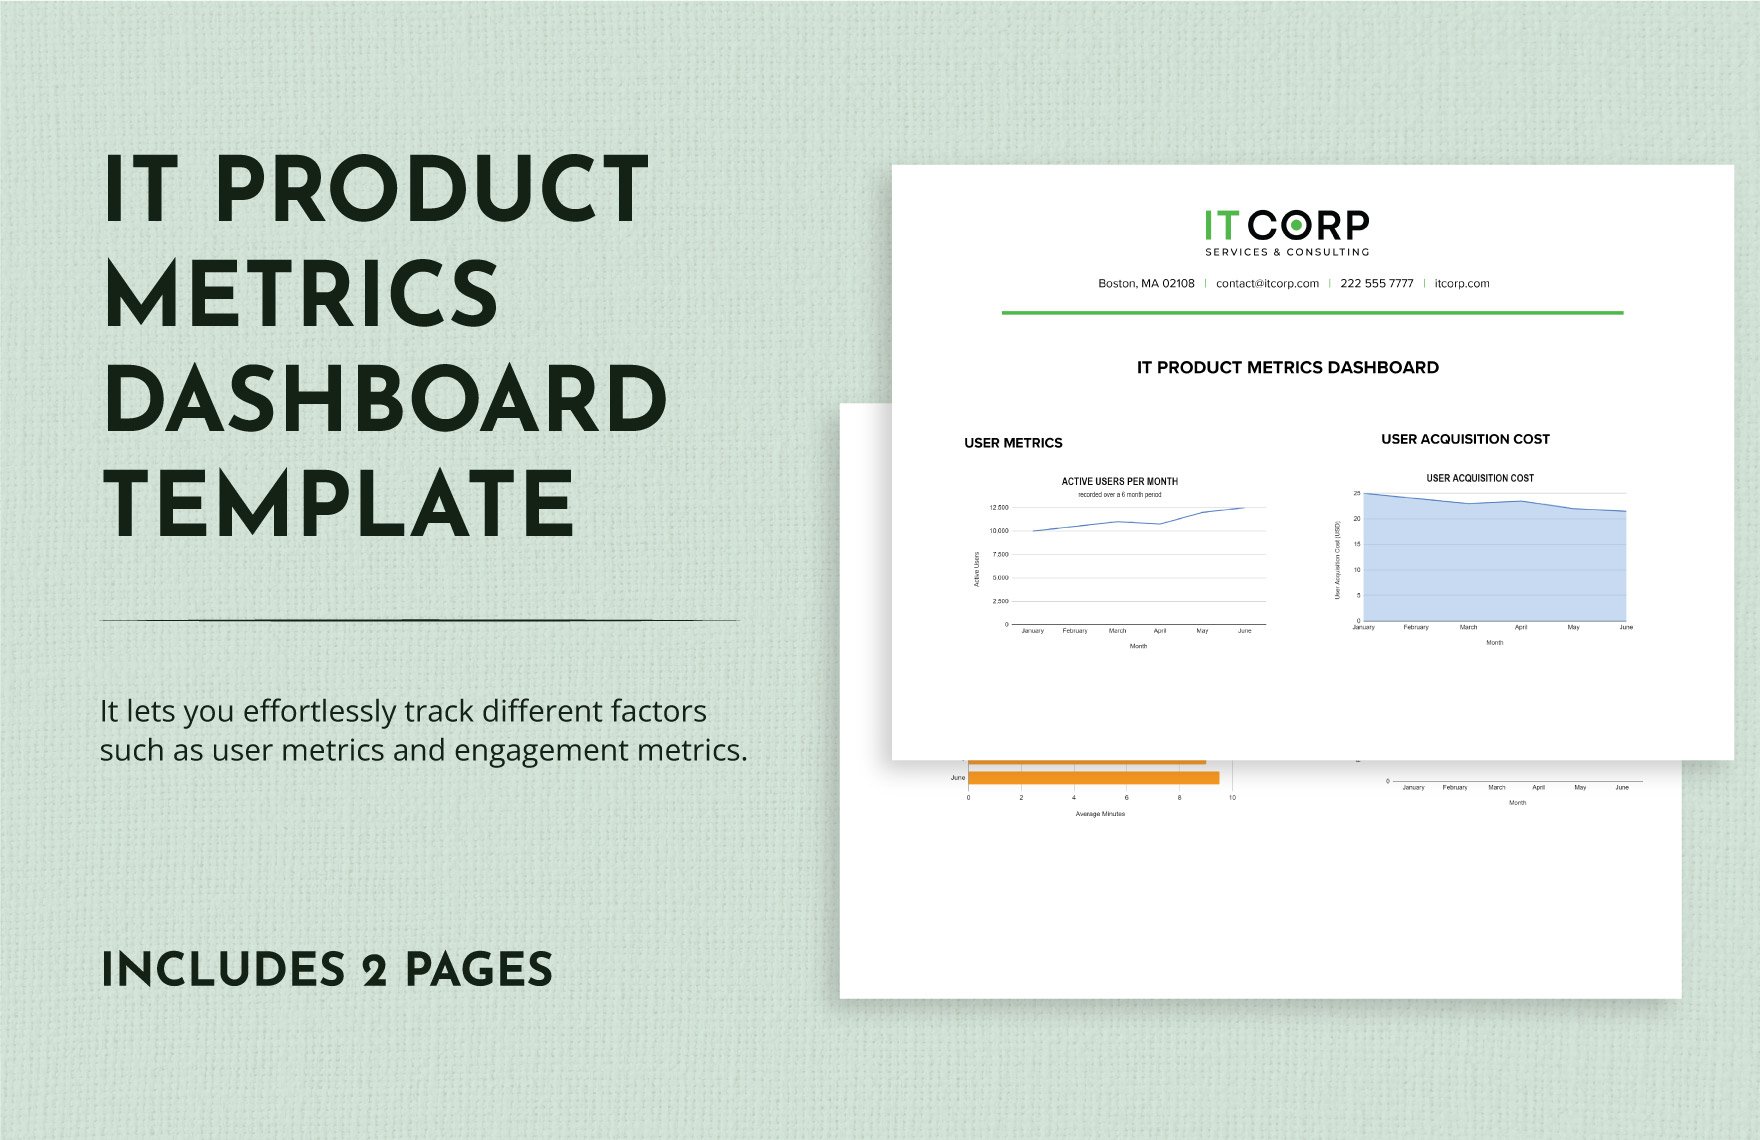 IT Product Metrics Dashboard Template in Word, Google Docs, PDF